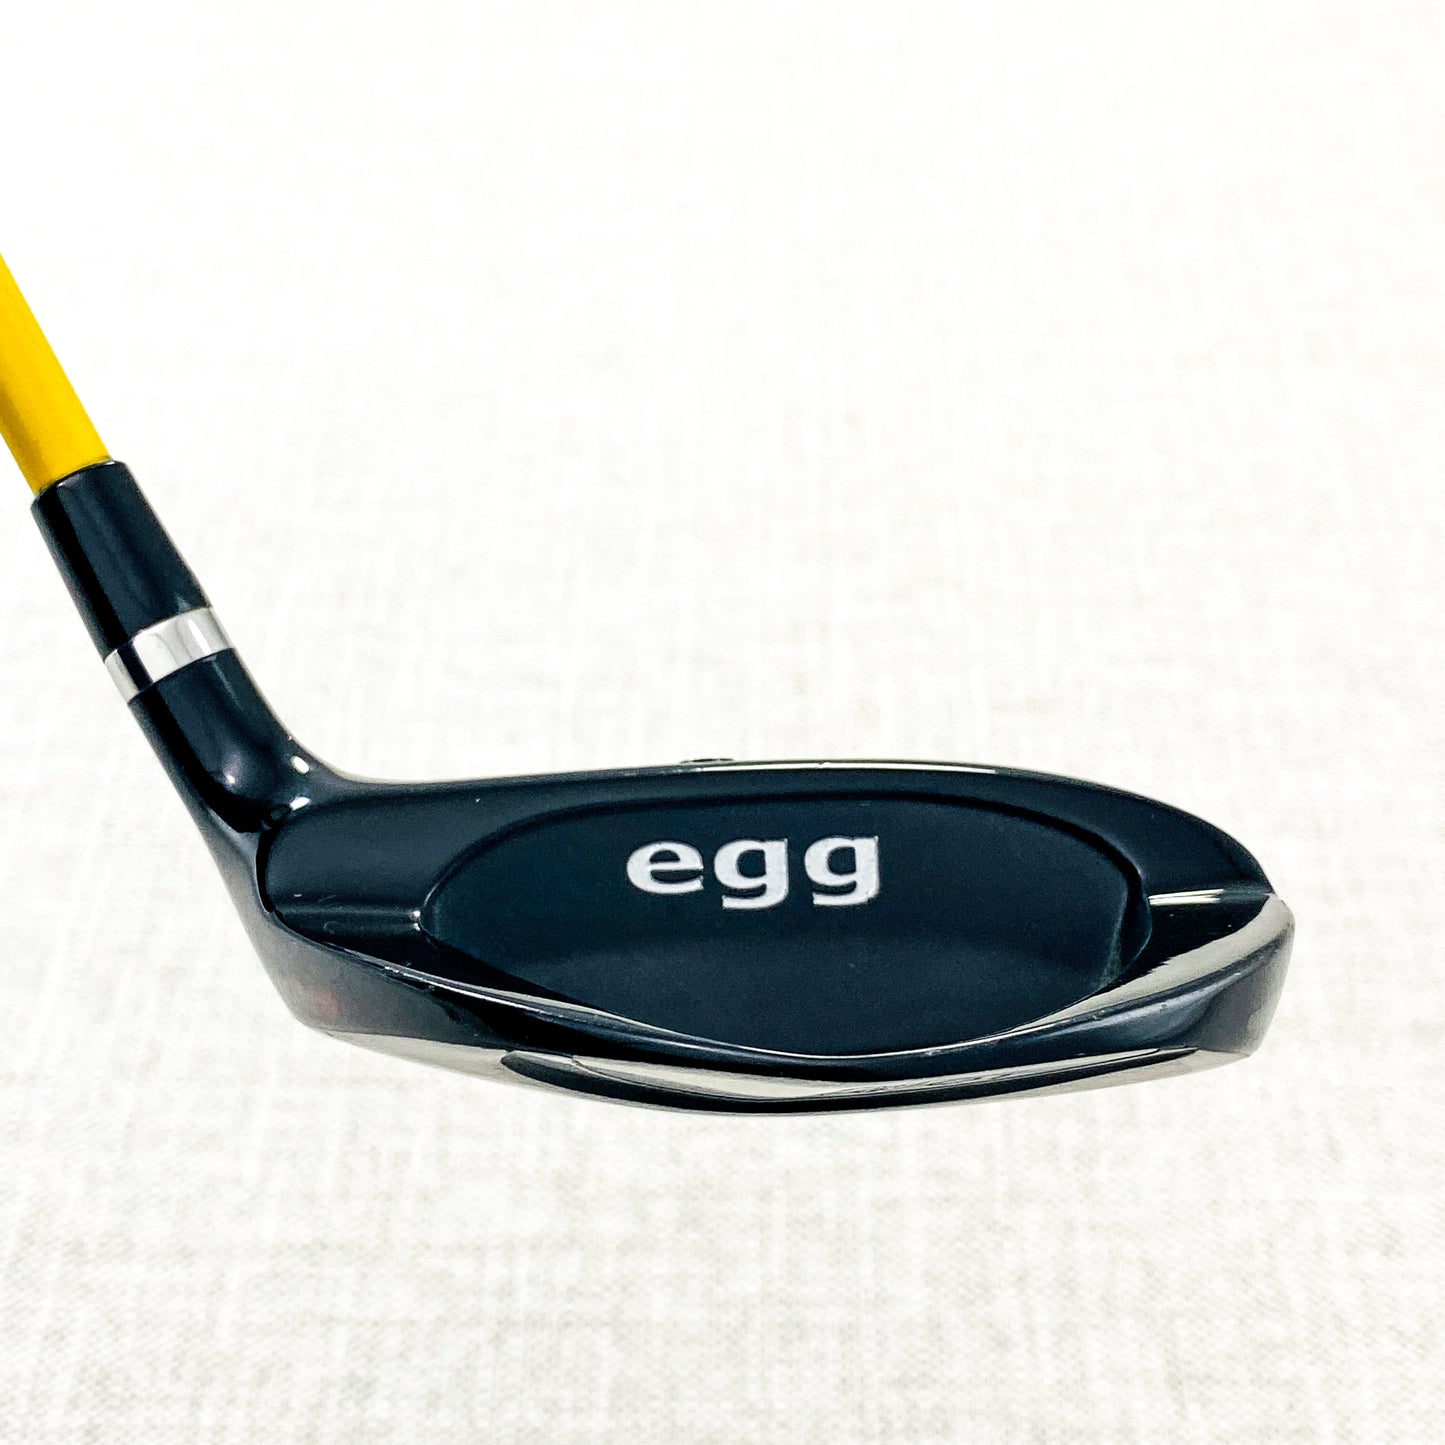 PRGR Egg 5-Wood. 18 Degree, Stiff Flex - Excellent Condition # T593